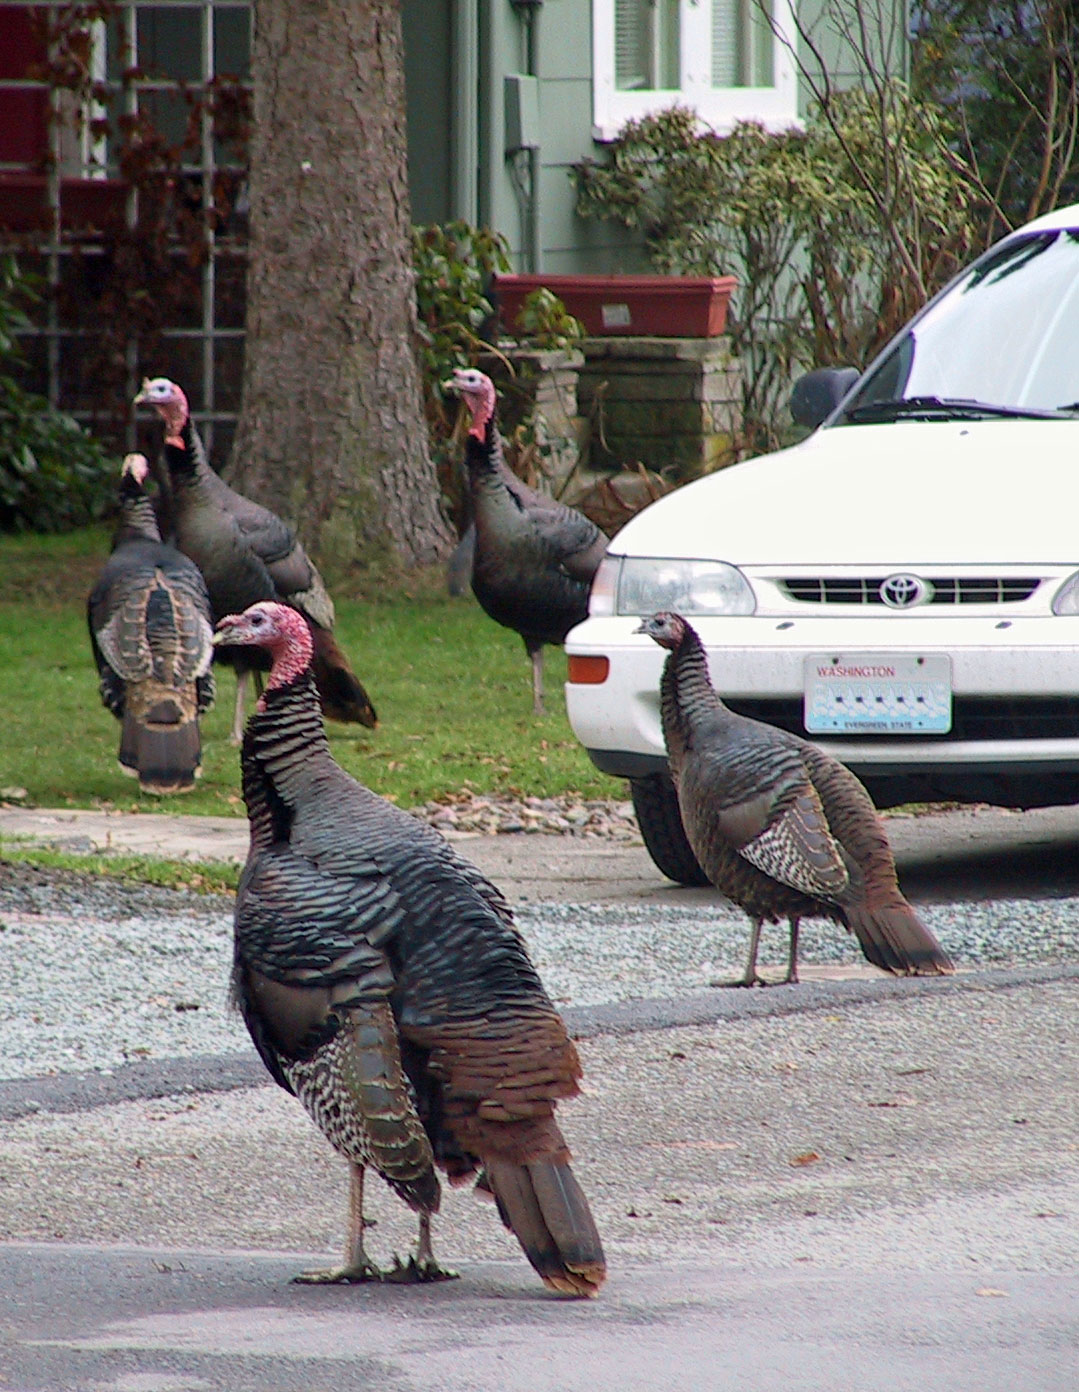 Turkeys crossing the street